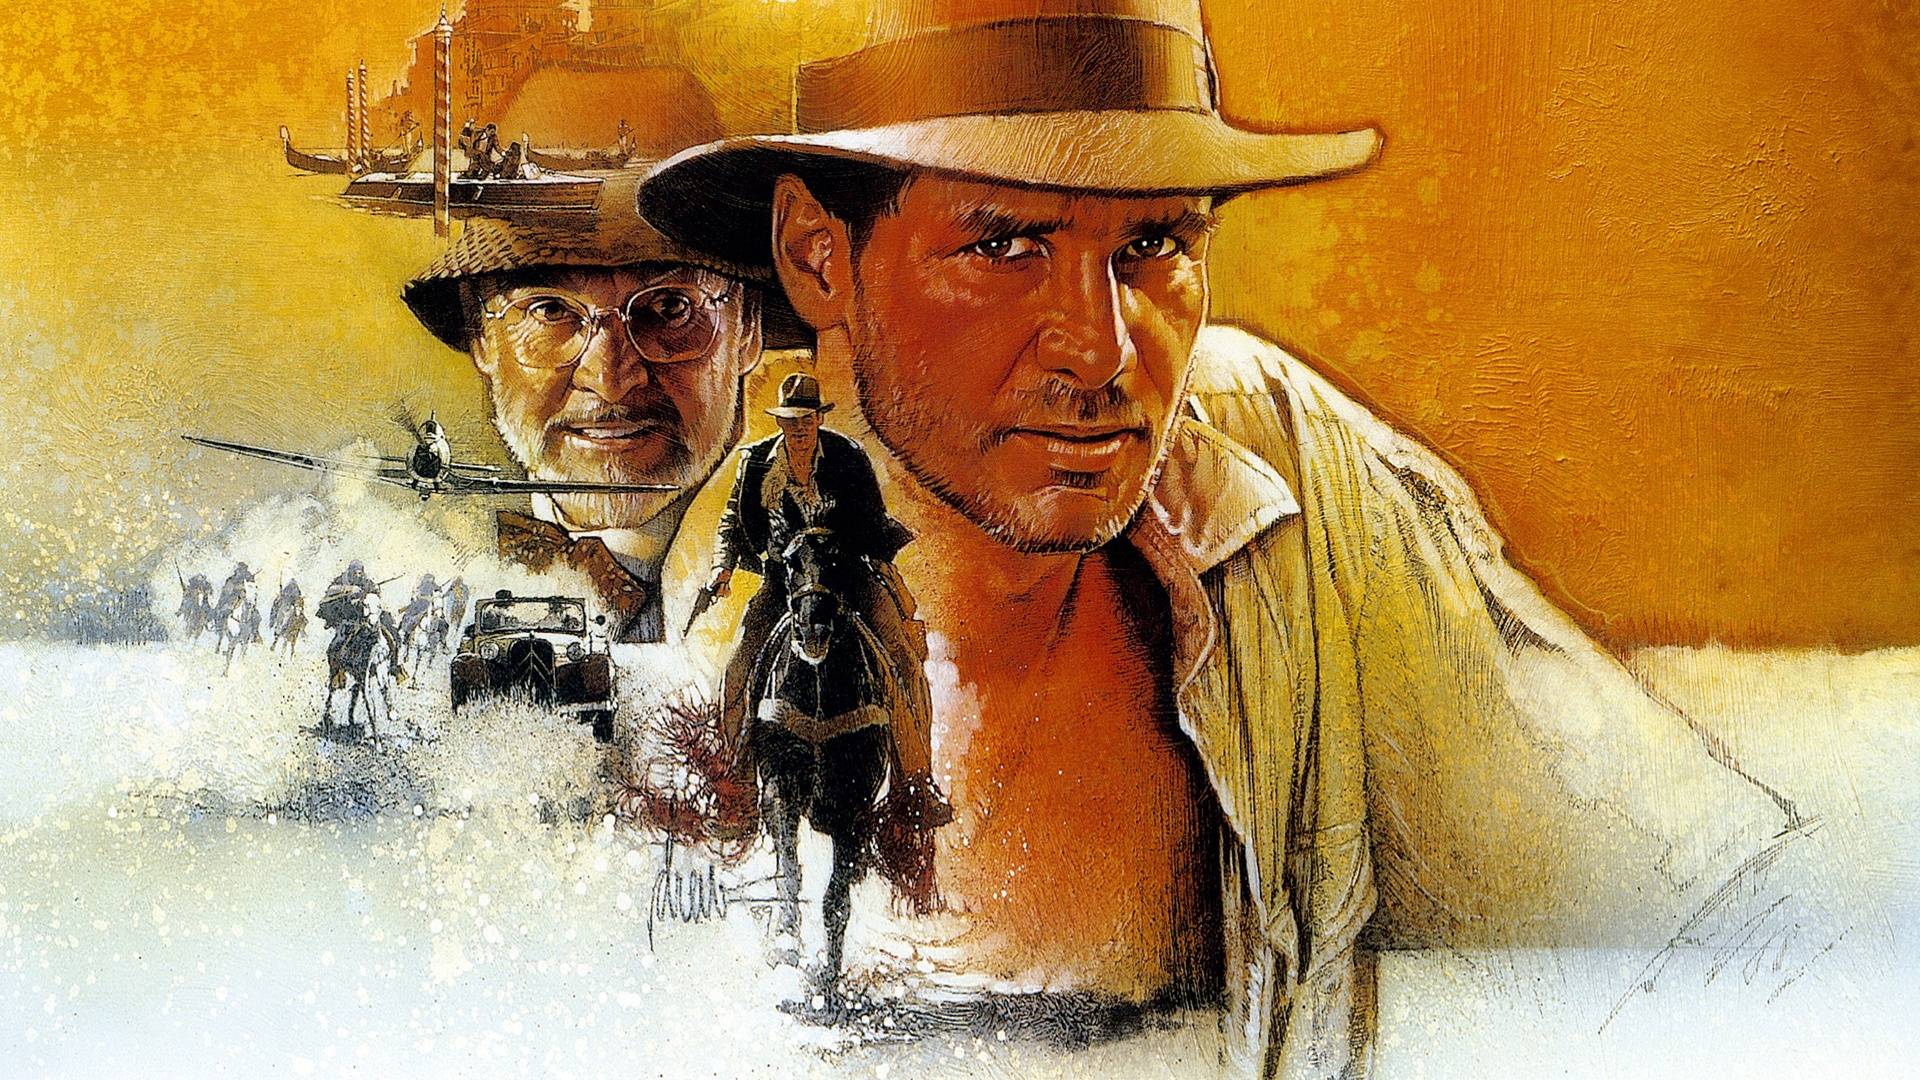 Hot Indiana Jones Image, G.sFDcY